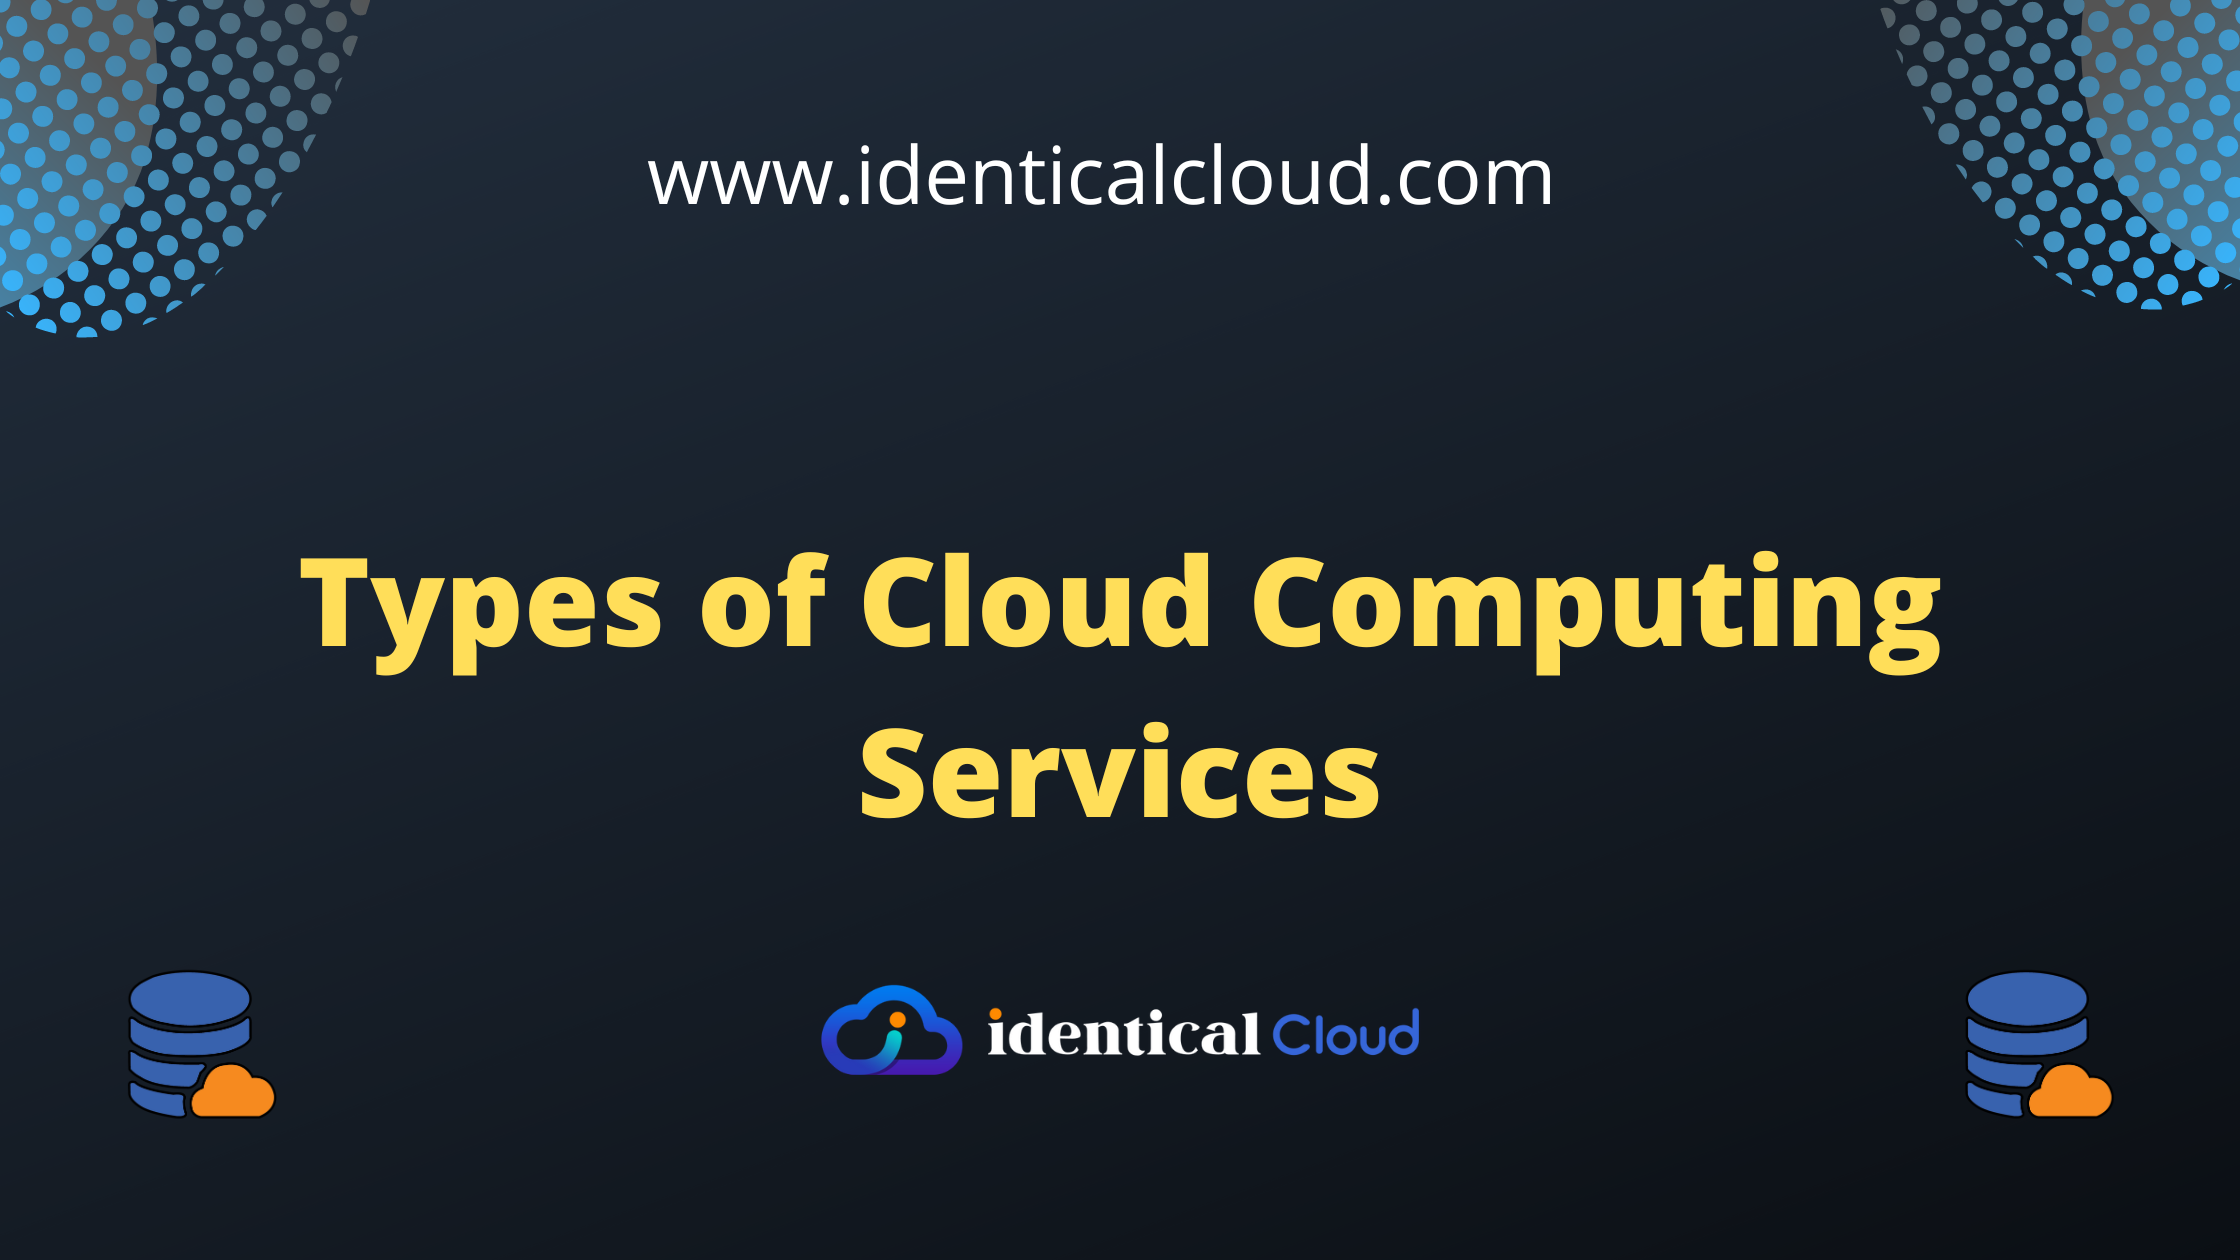 Types of Cloud Computing Services - identicalcloud.com